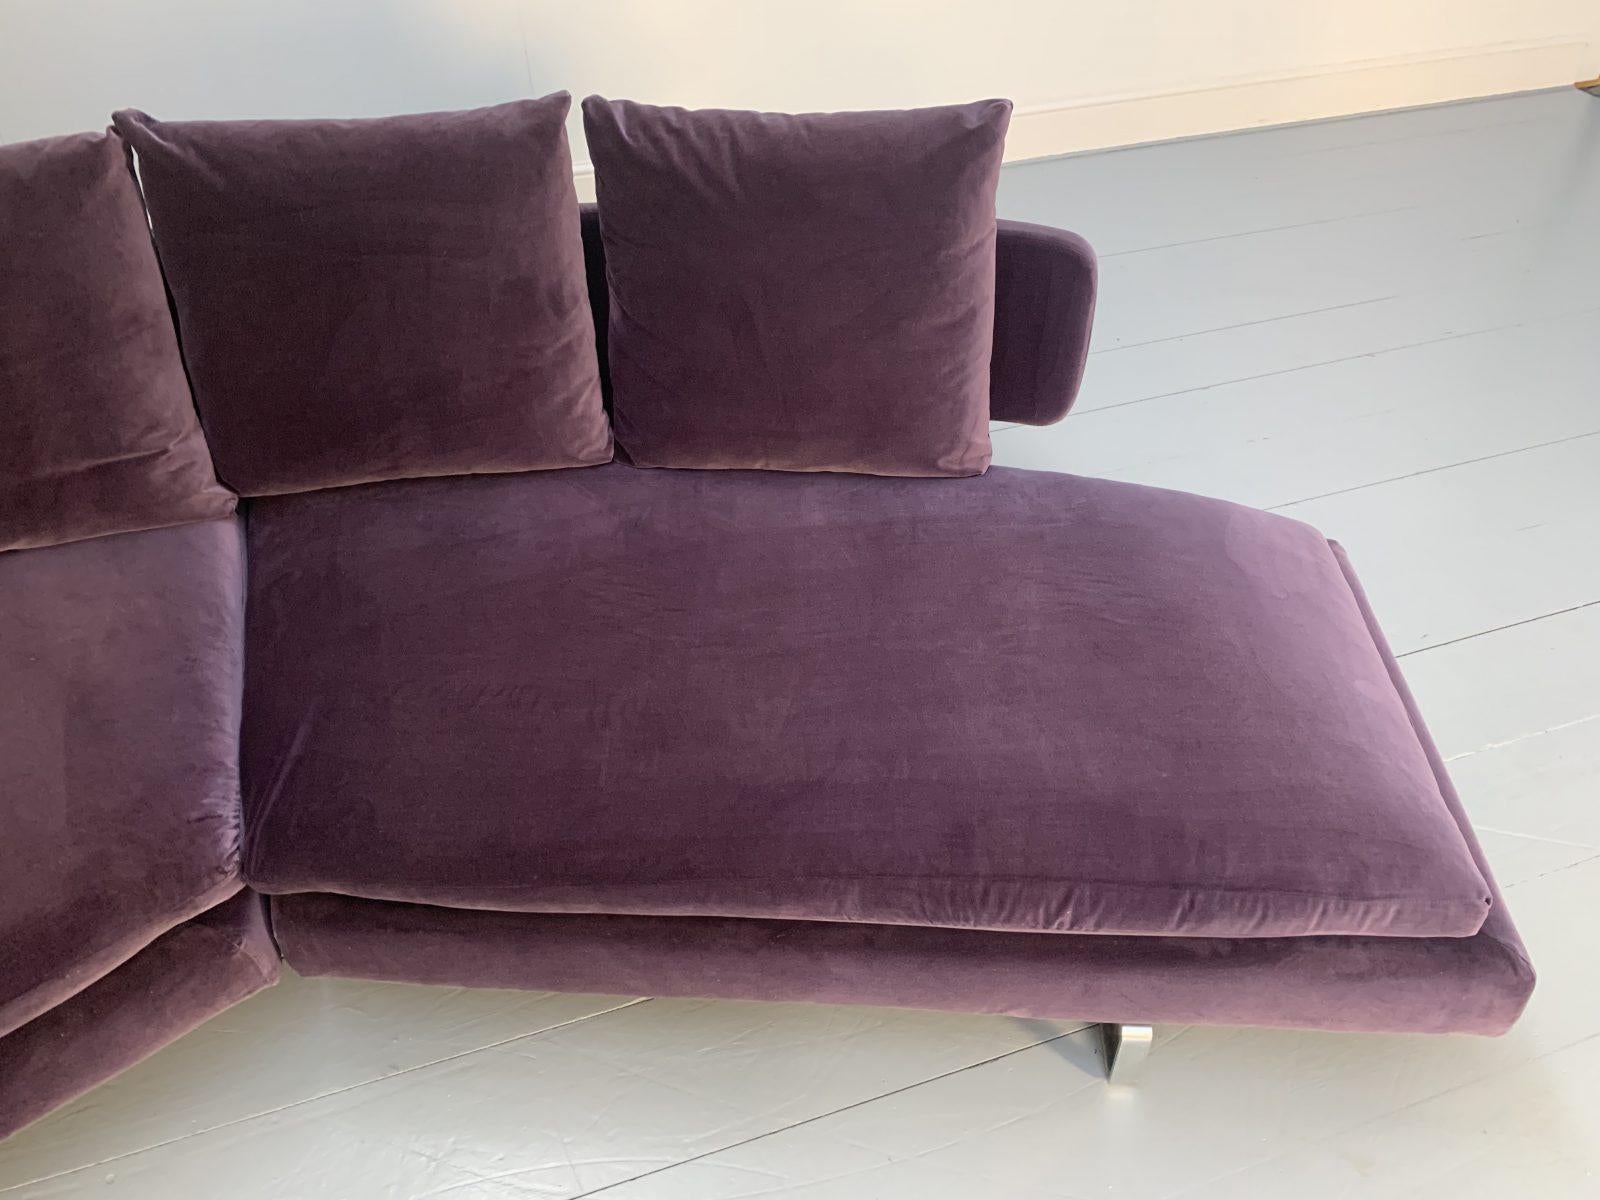 B&B Italia “Arne A252C_1” 4-Seat Curved Sofa in Purple Velvet For Sale 1